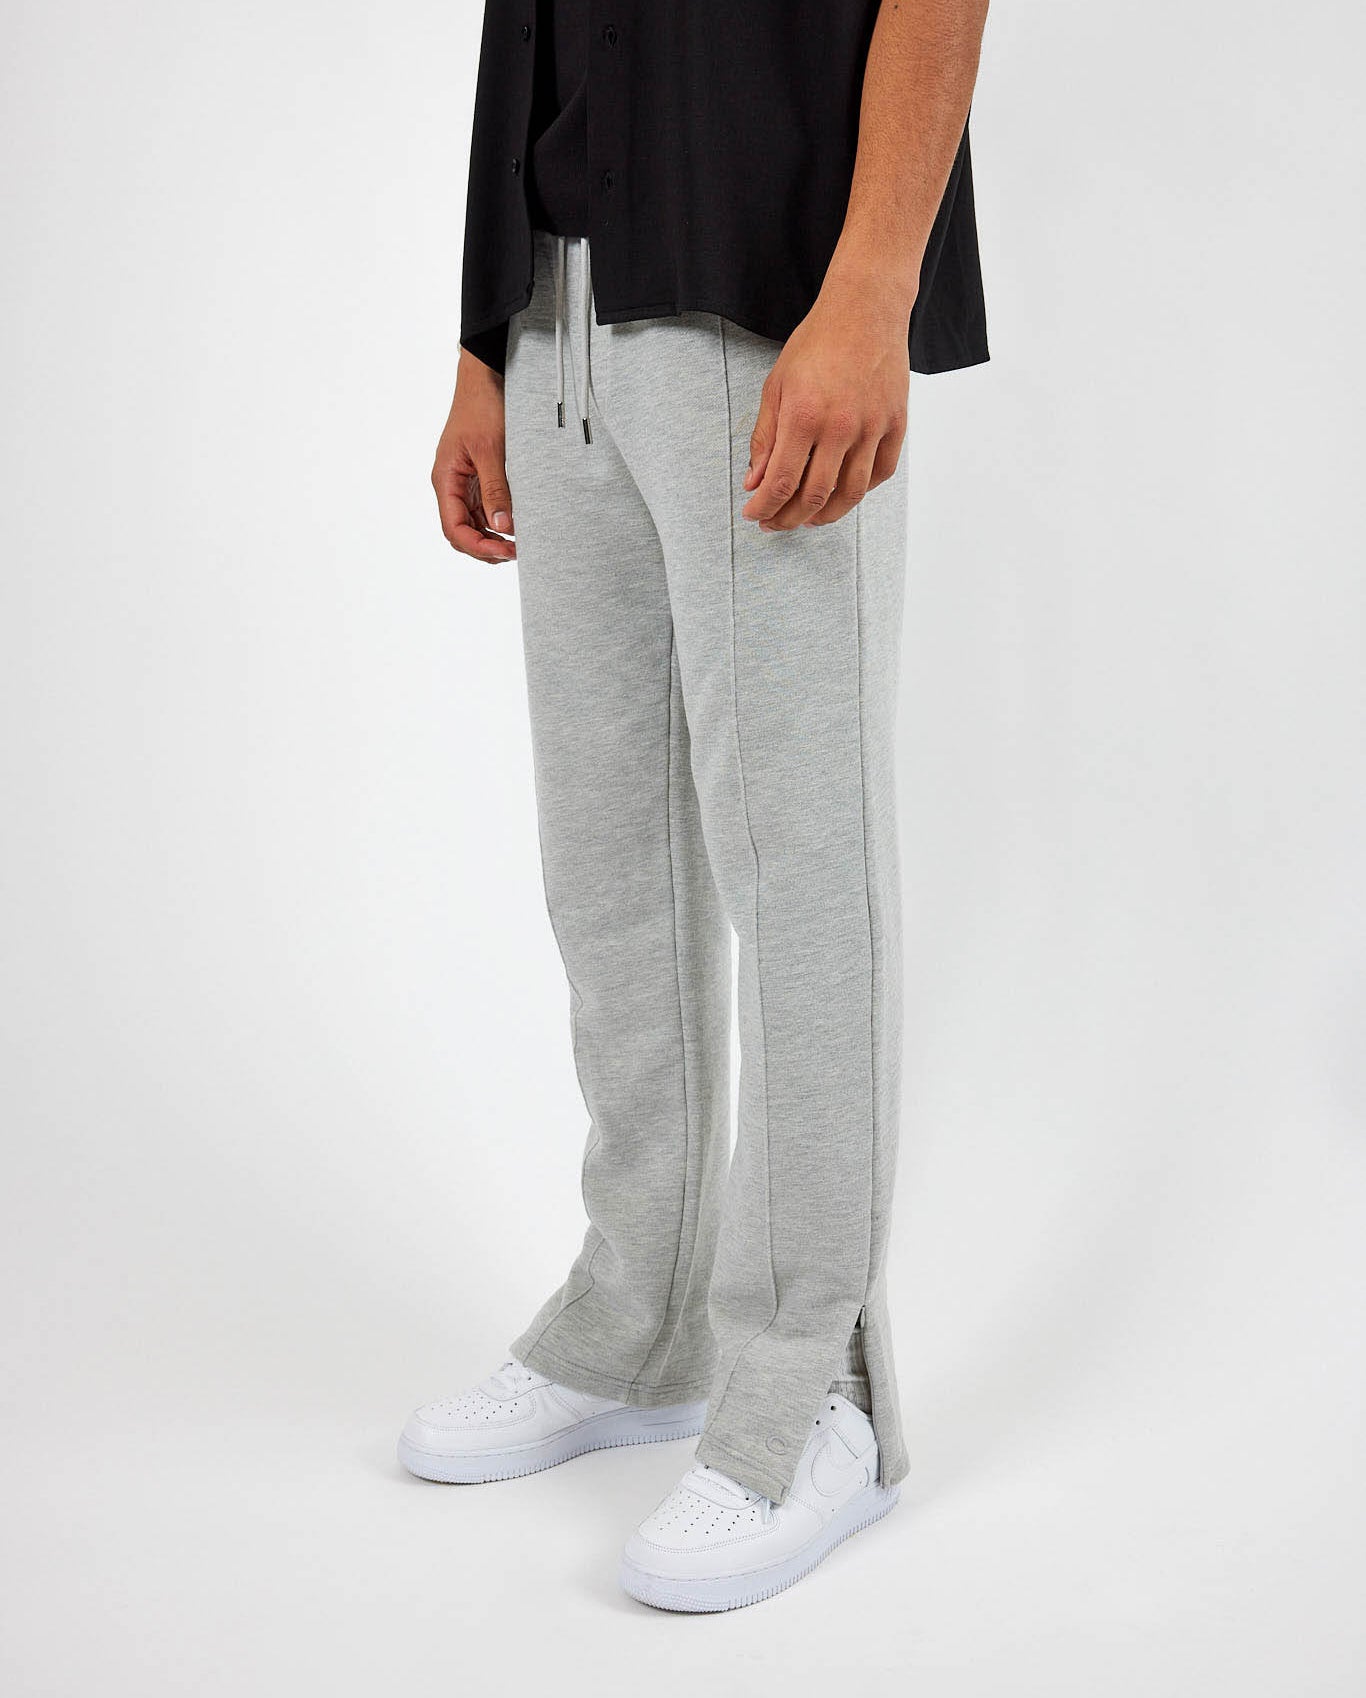 Homer - Lt Grey Marl - Drawcord Sweat Pants Leisurewear, Knitwear